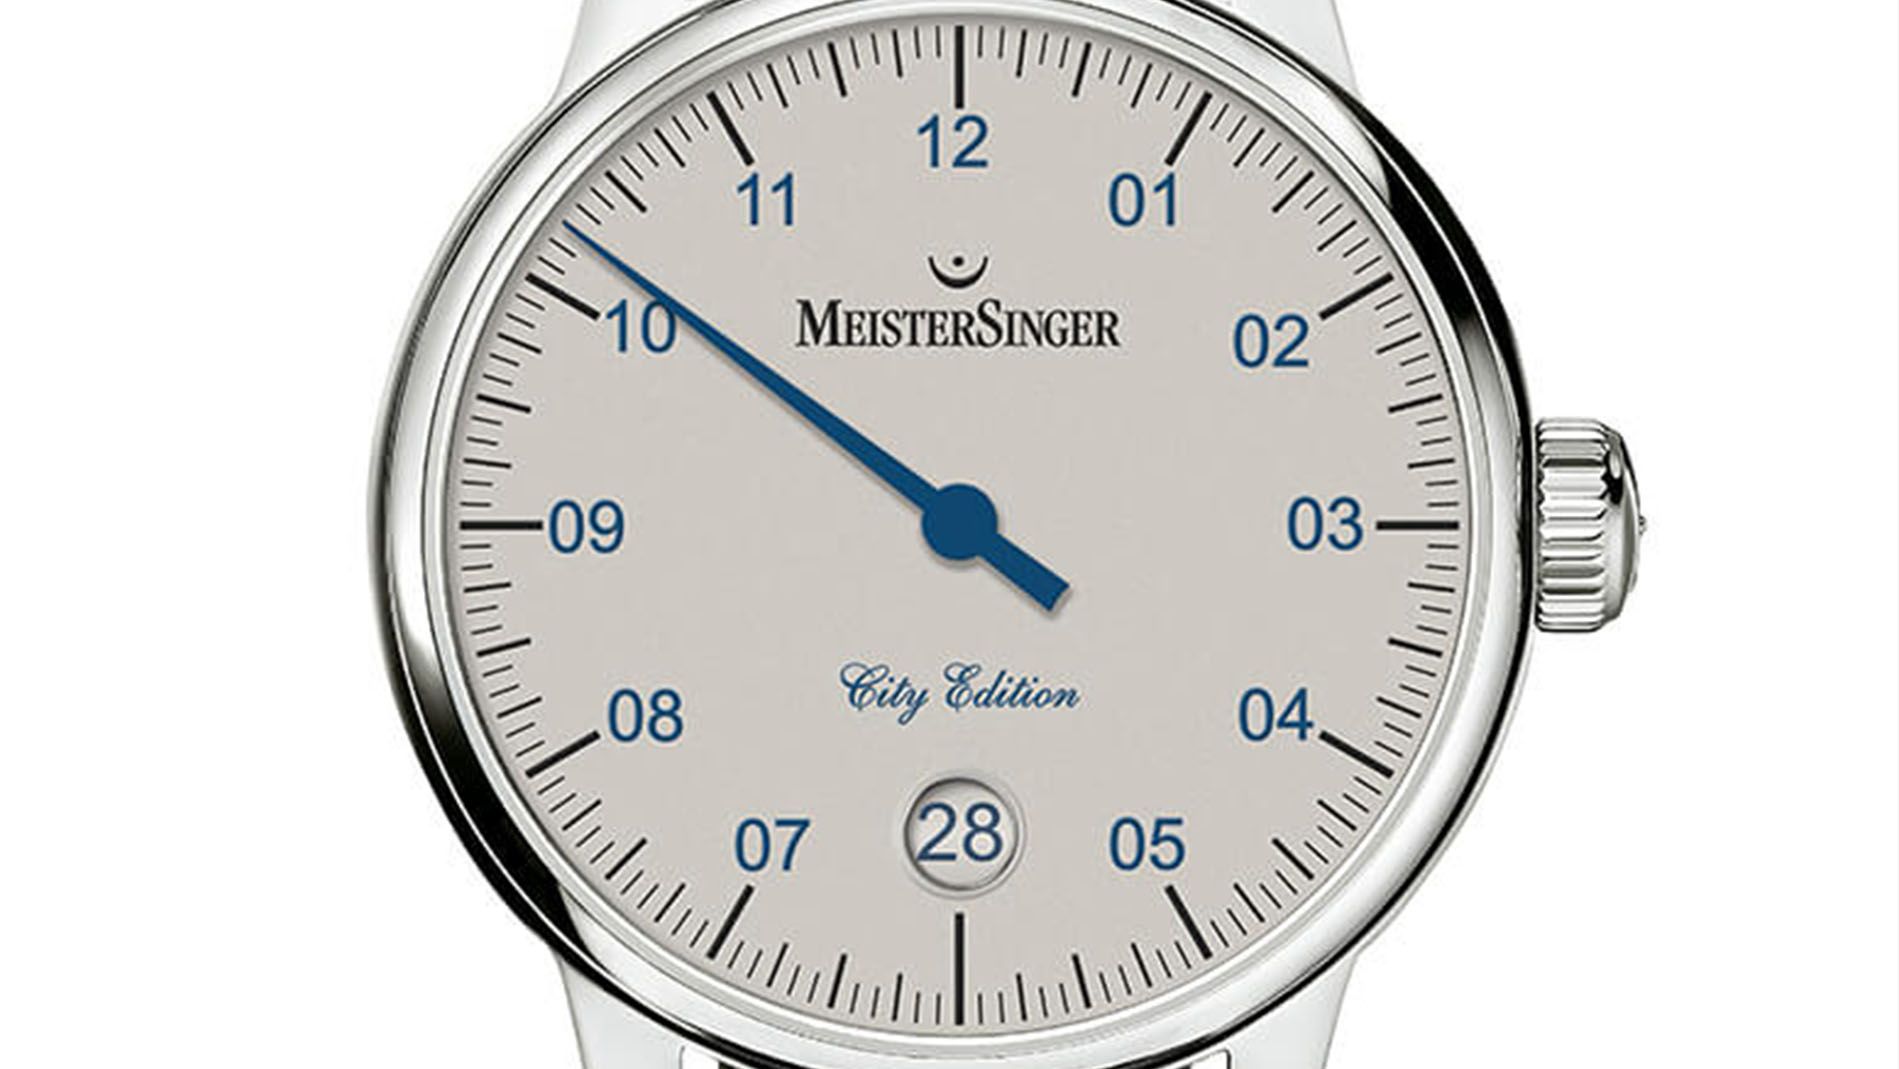 MeisterSinger City Edition detalle frontal debajo del reloj blog de relojes